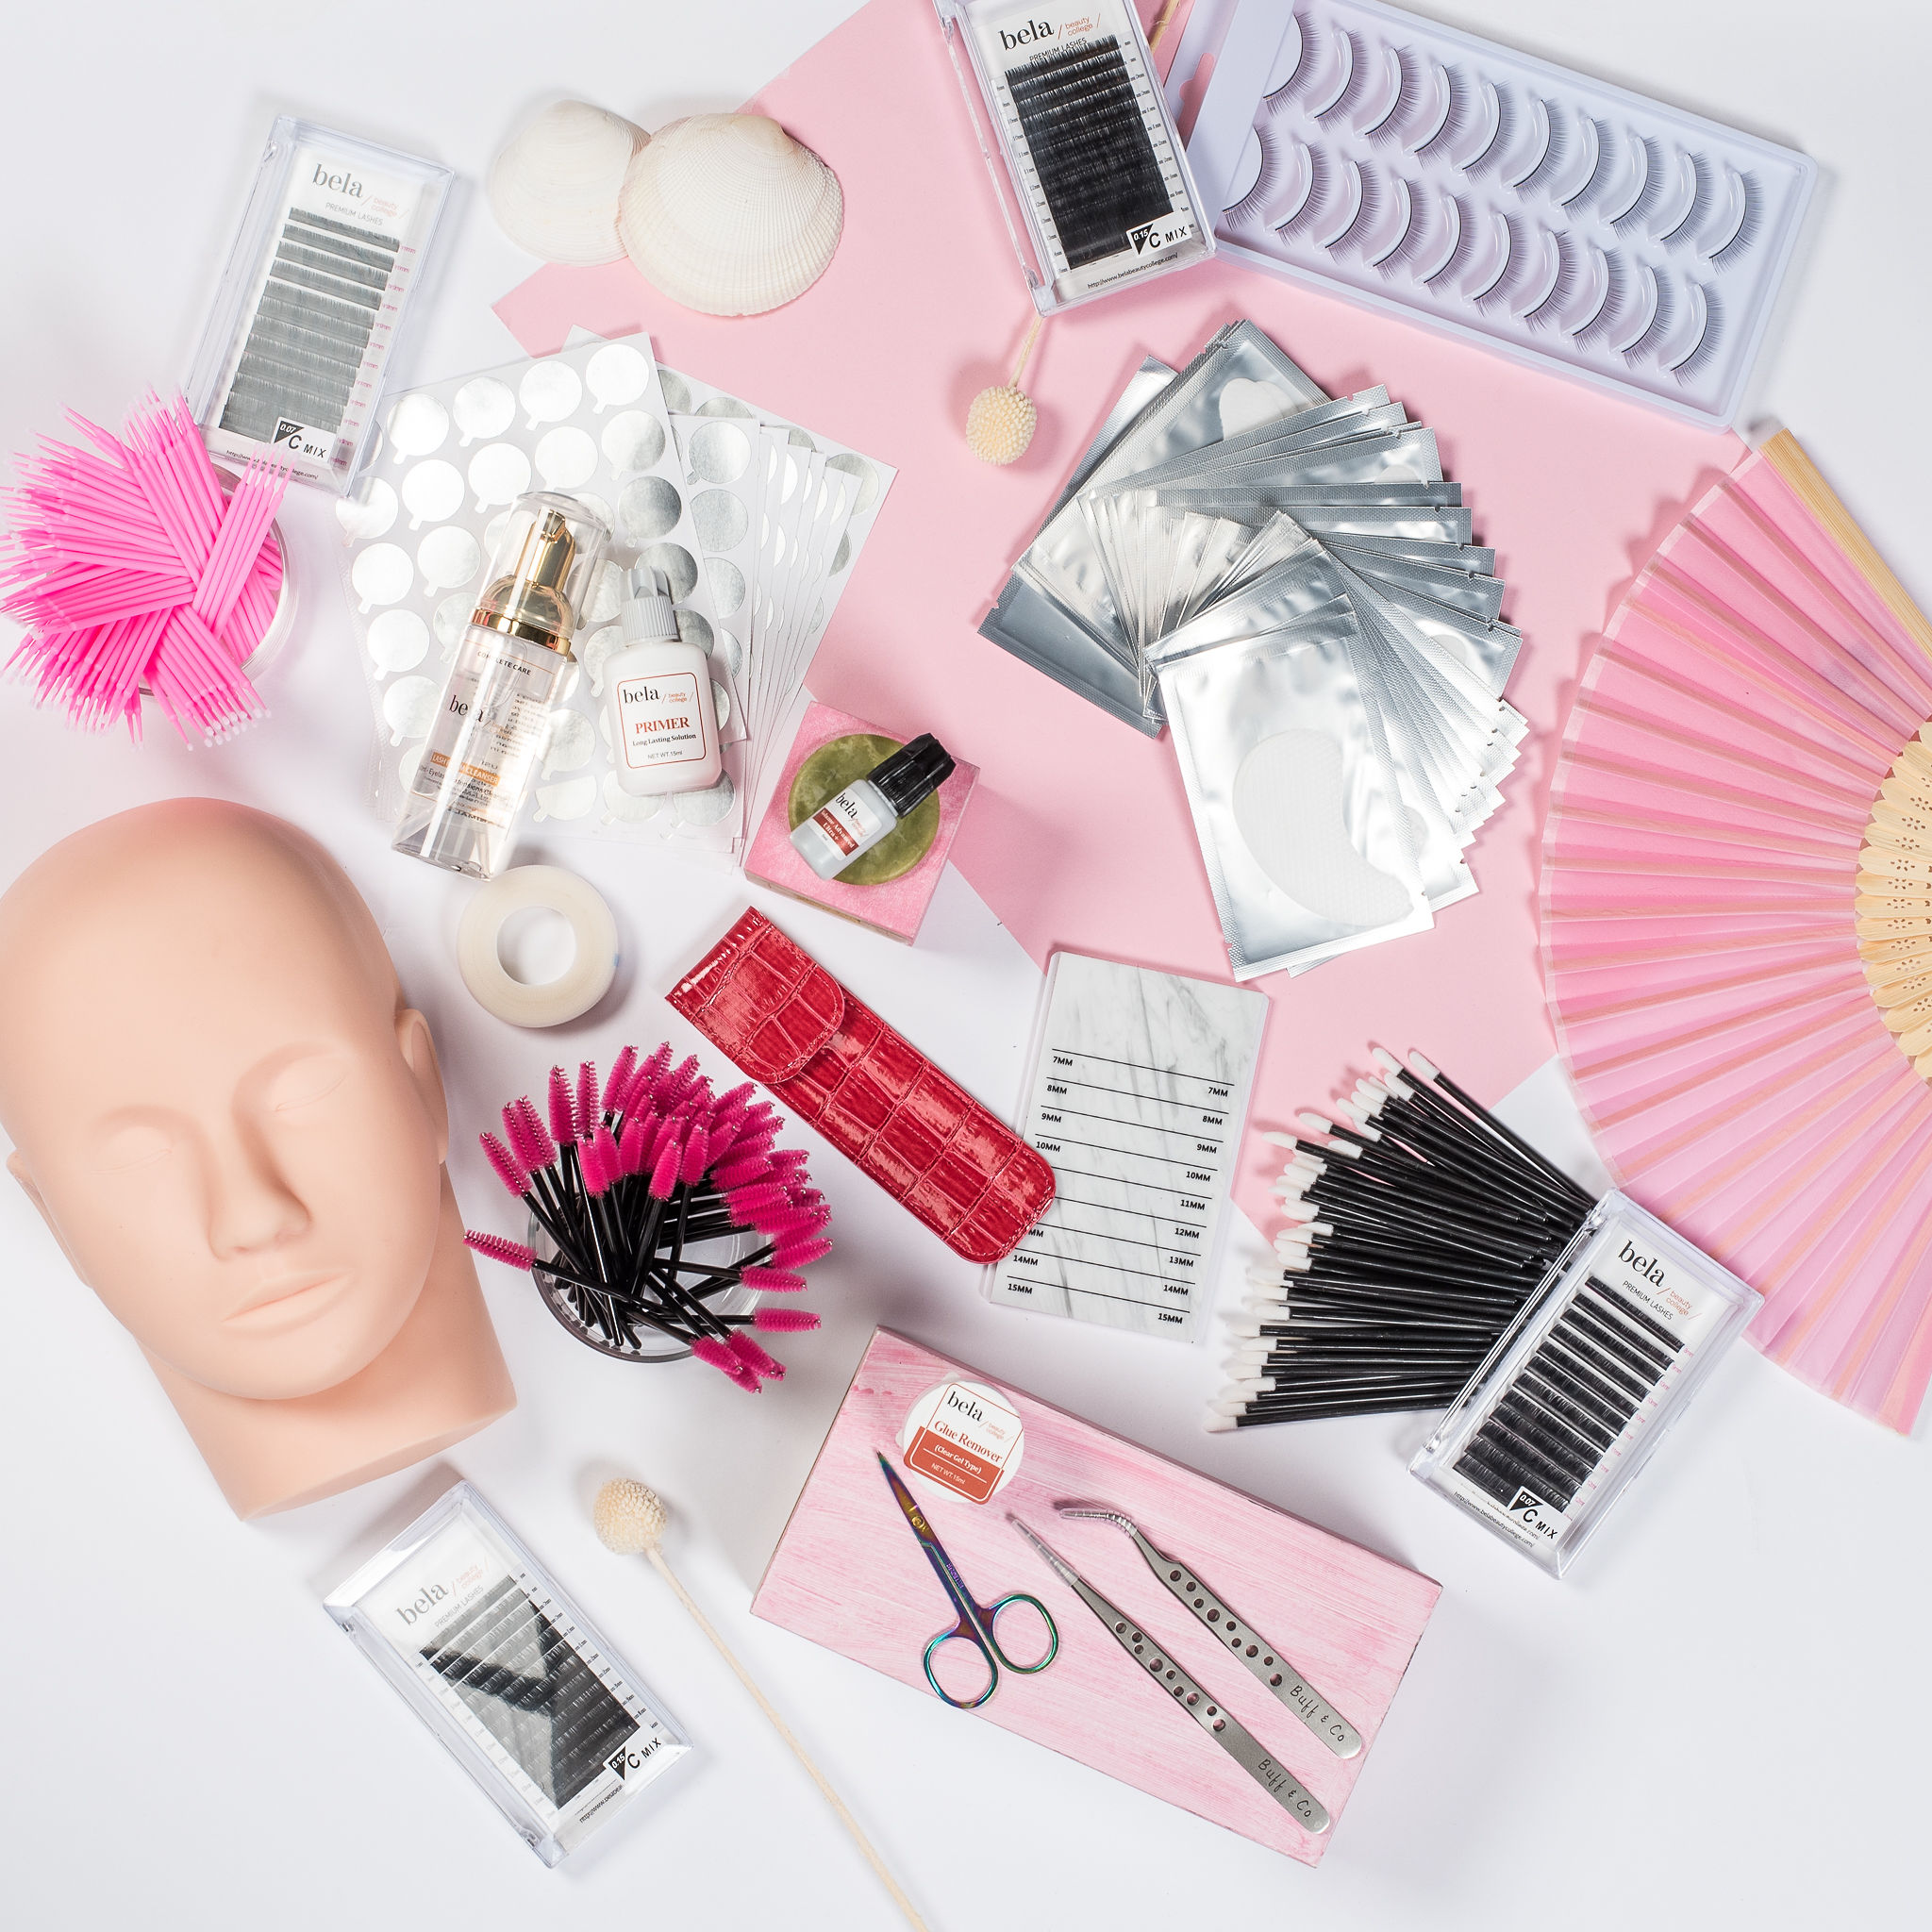 Kits Eyelash Extensions – Beauty Lash